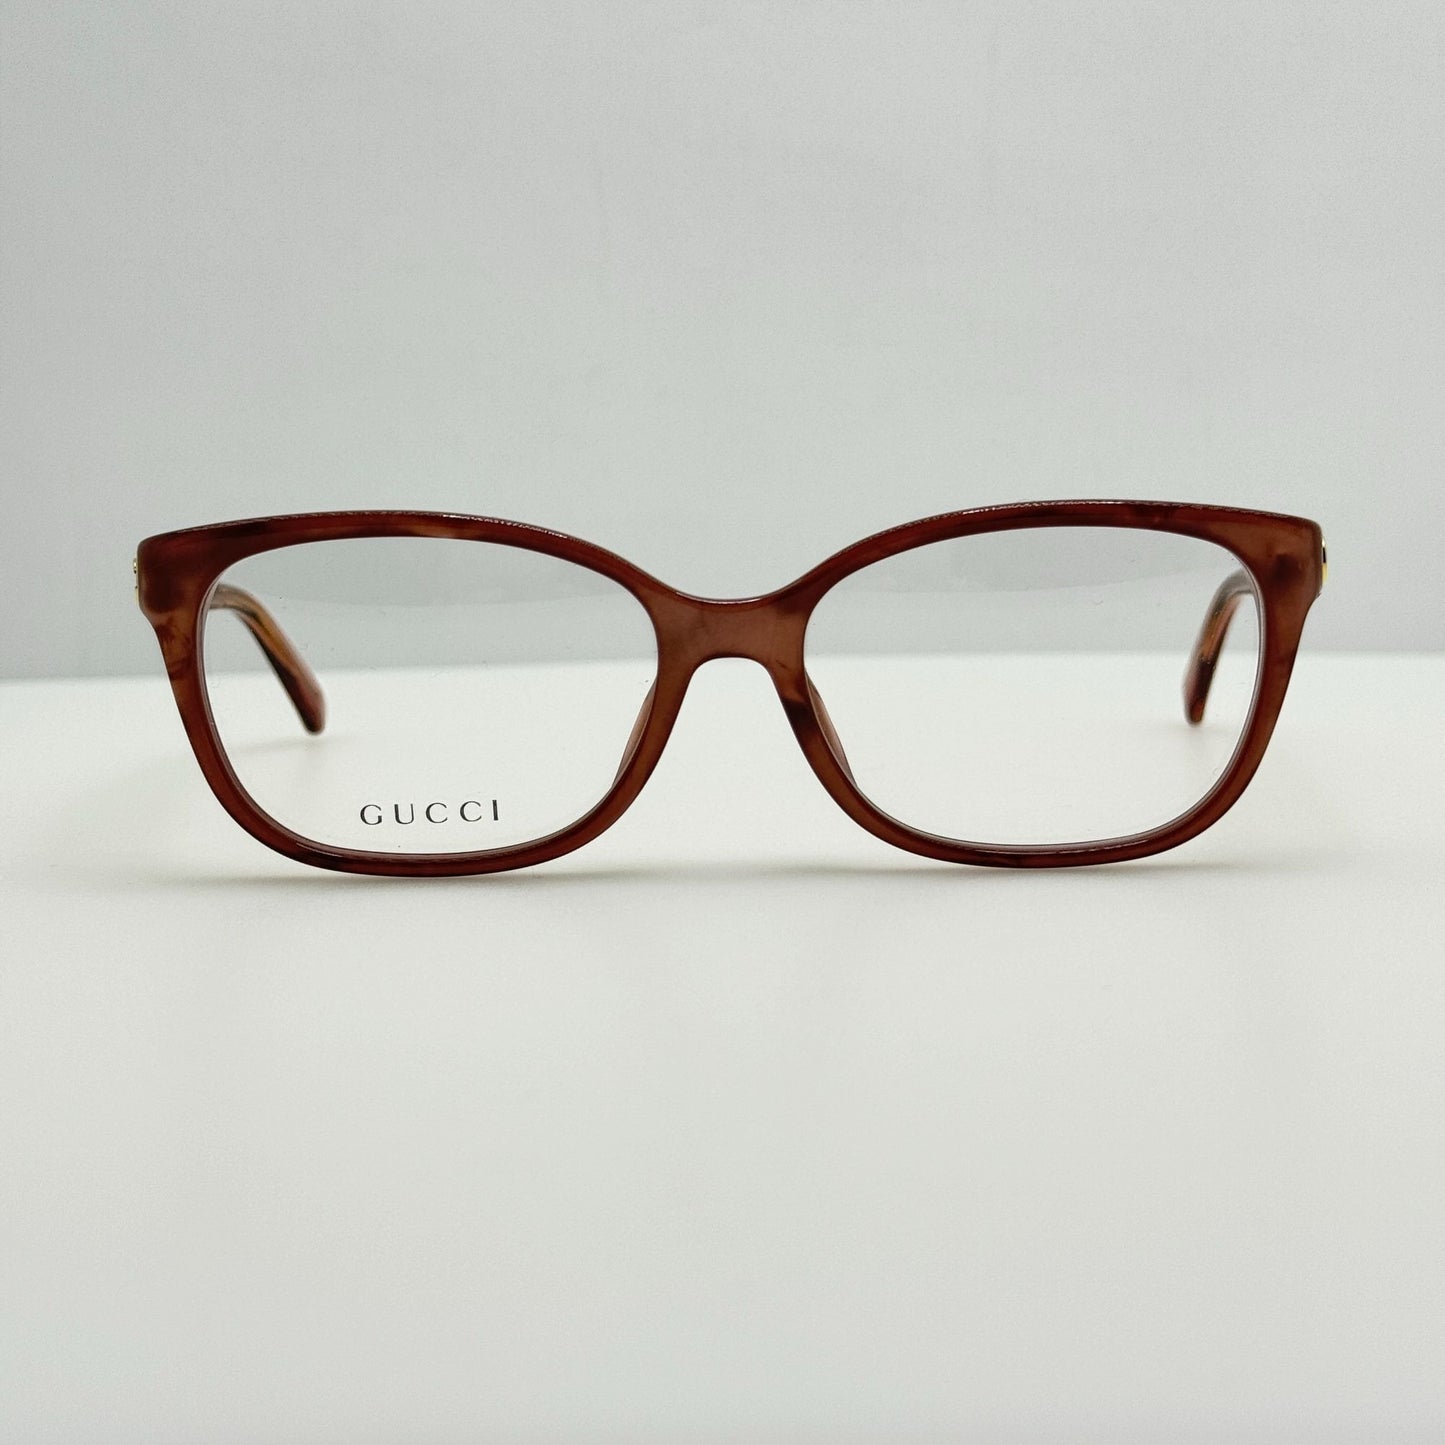 Gucci Eyeglasses Eye Glasses Frames GG 3858/F 54-16-140 R4F Italy